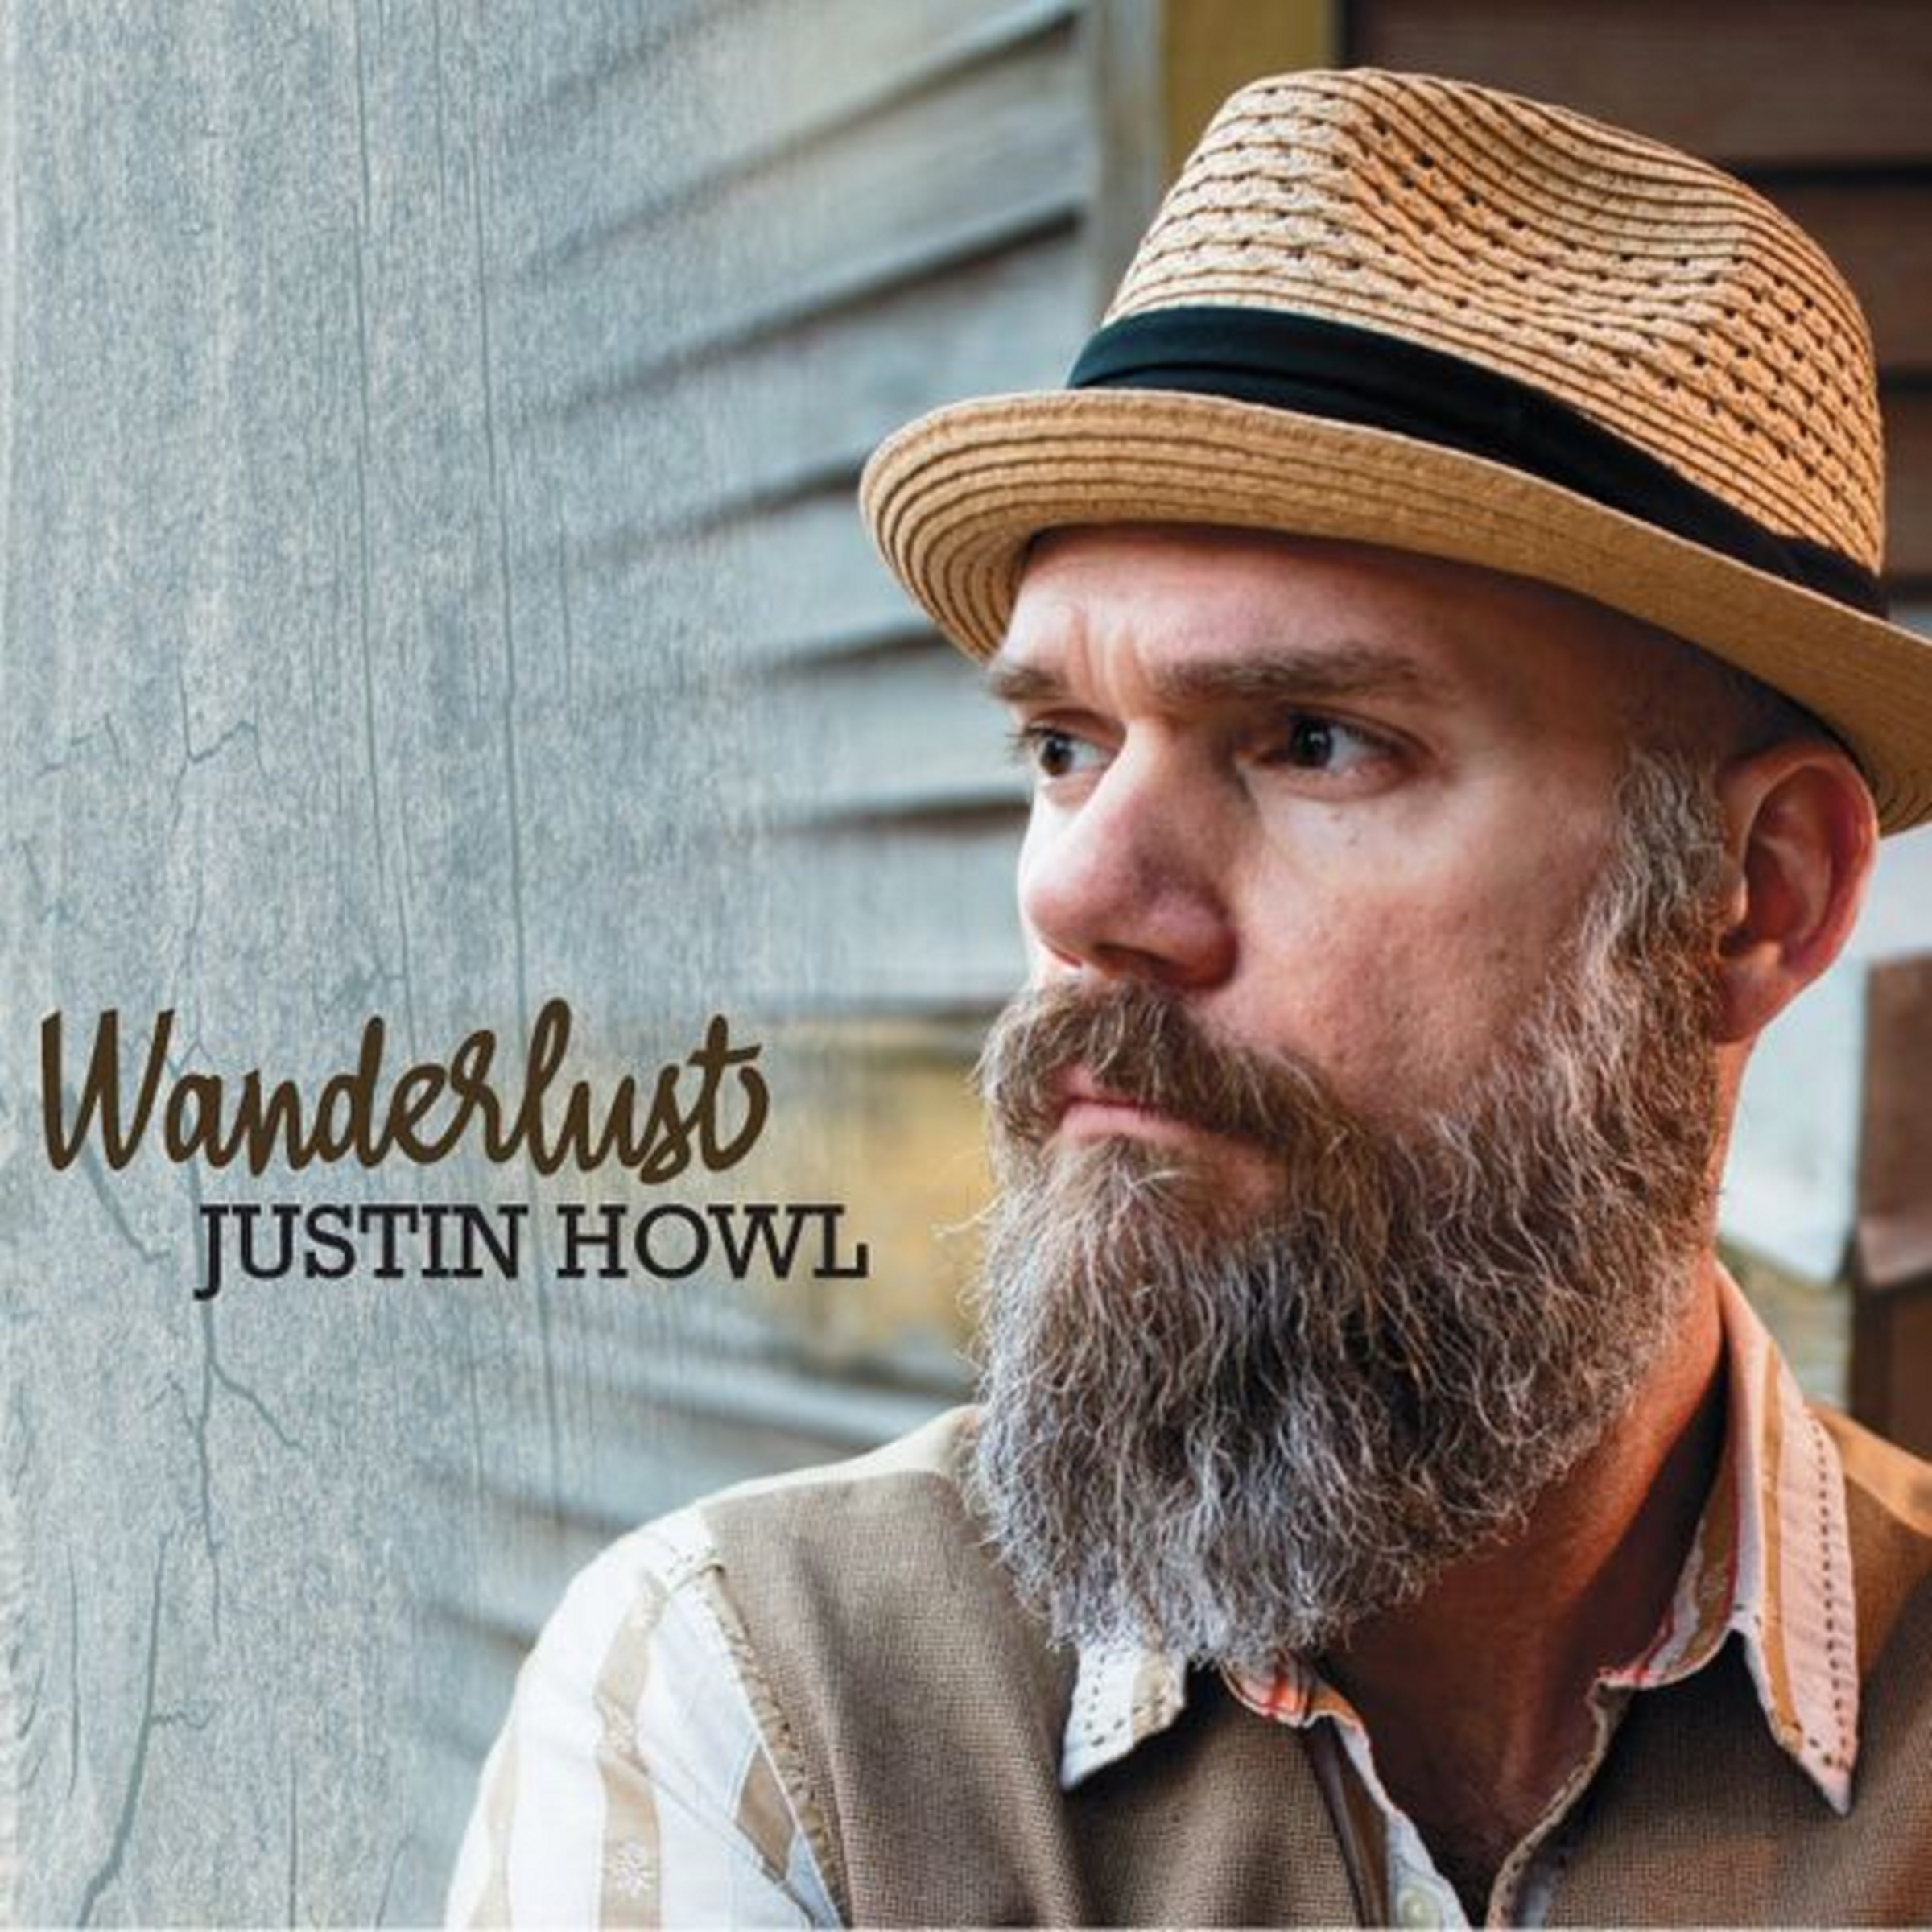 Justin Howl to release "Wanderlust" December 1st